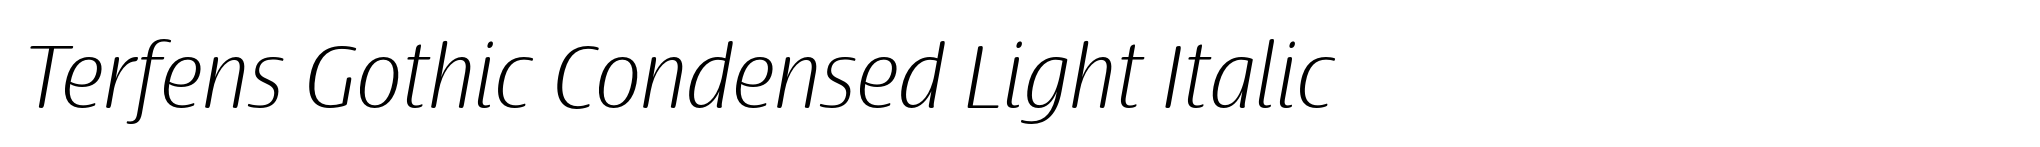 Terfens Gothic Condensed Light Italic image